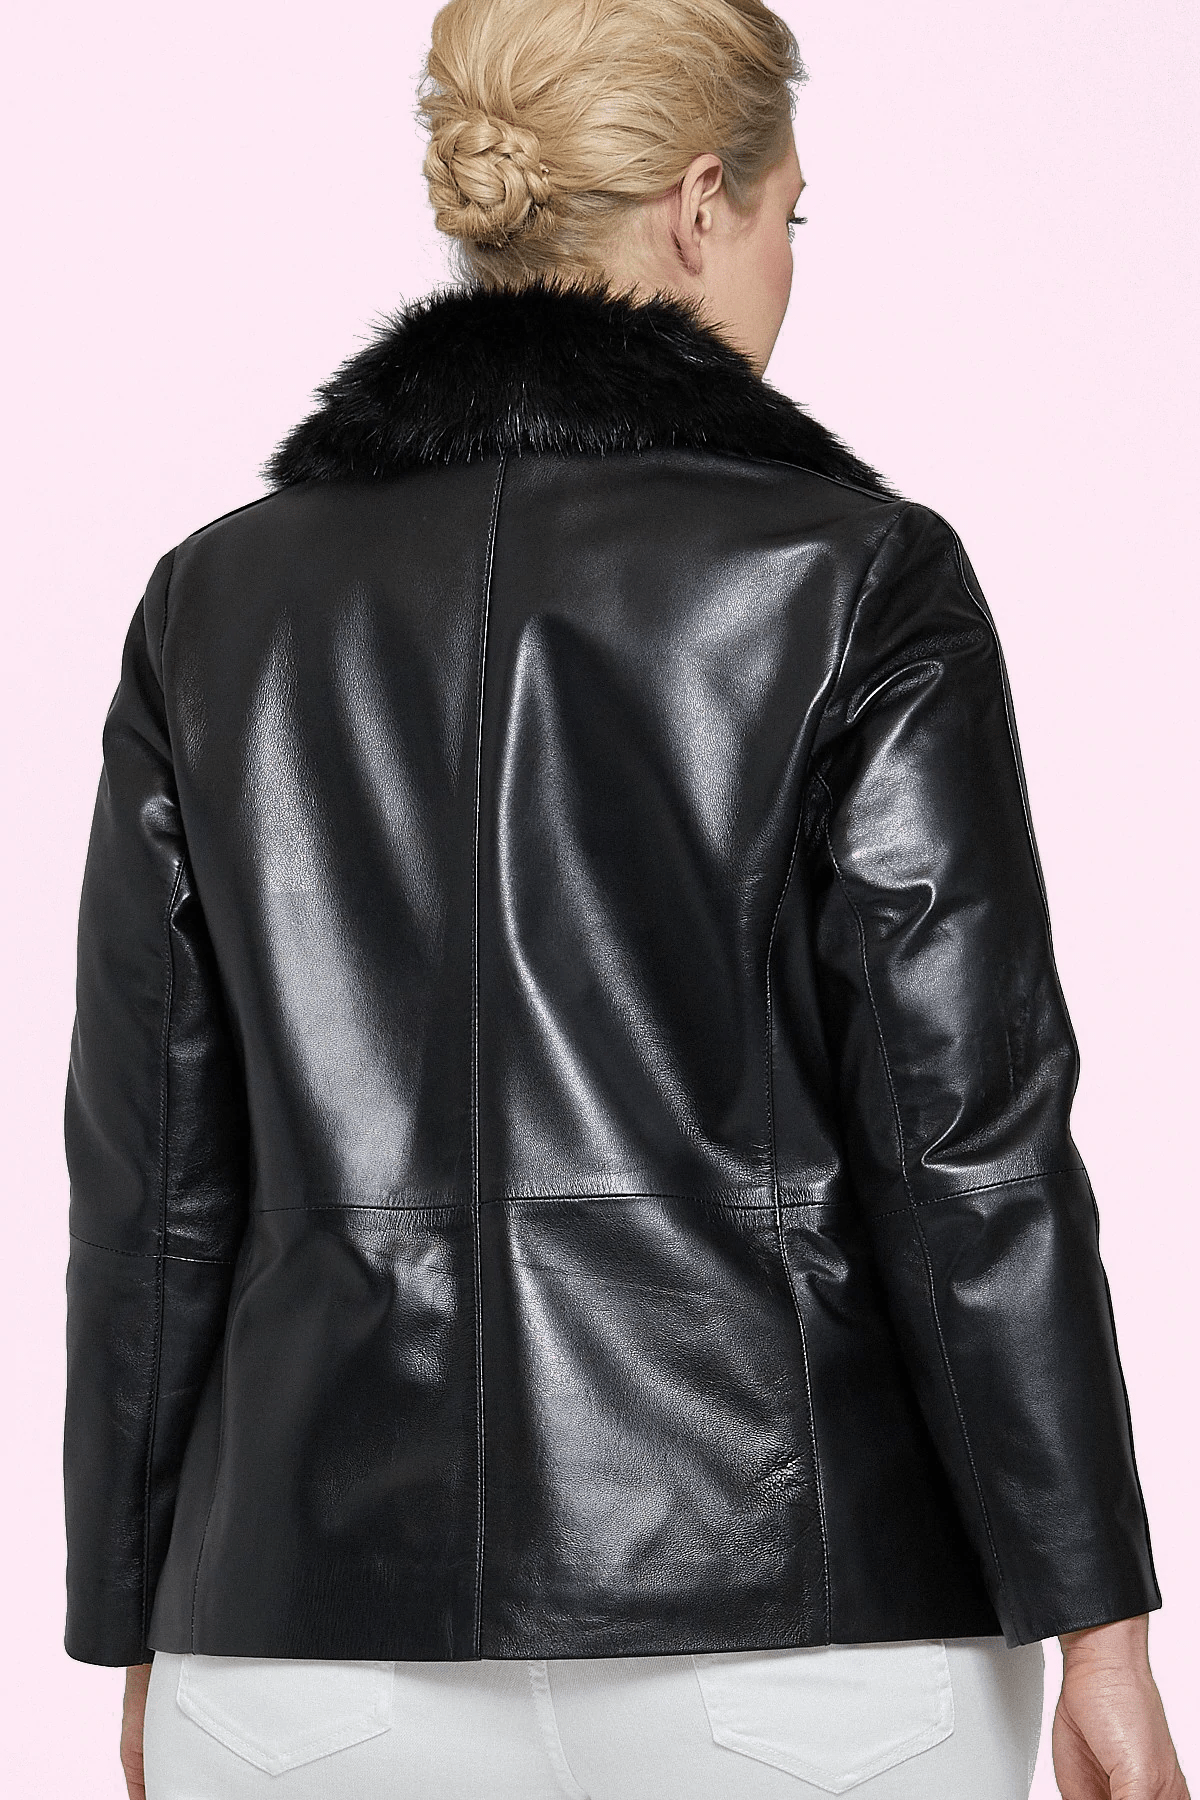 Samantha Fur Leather Jacket - AirBorne Jacket